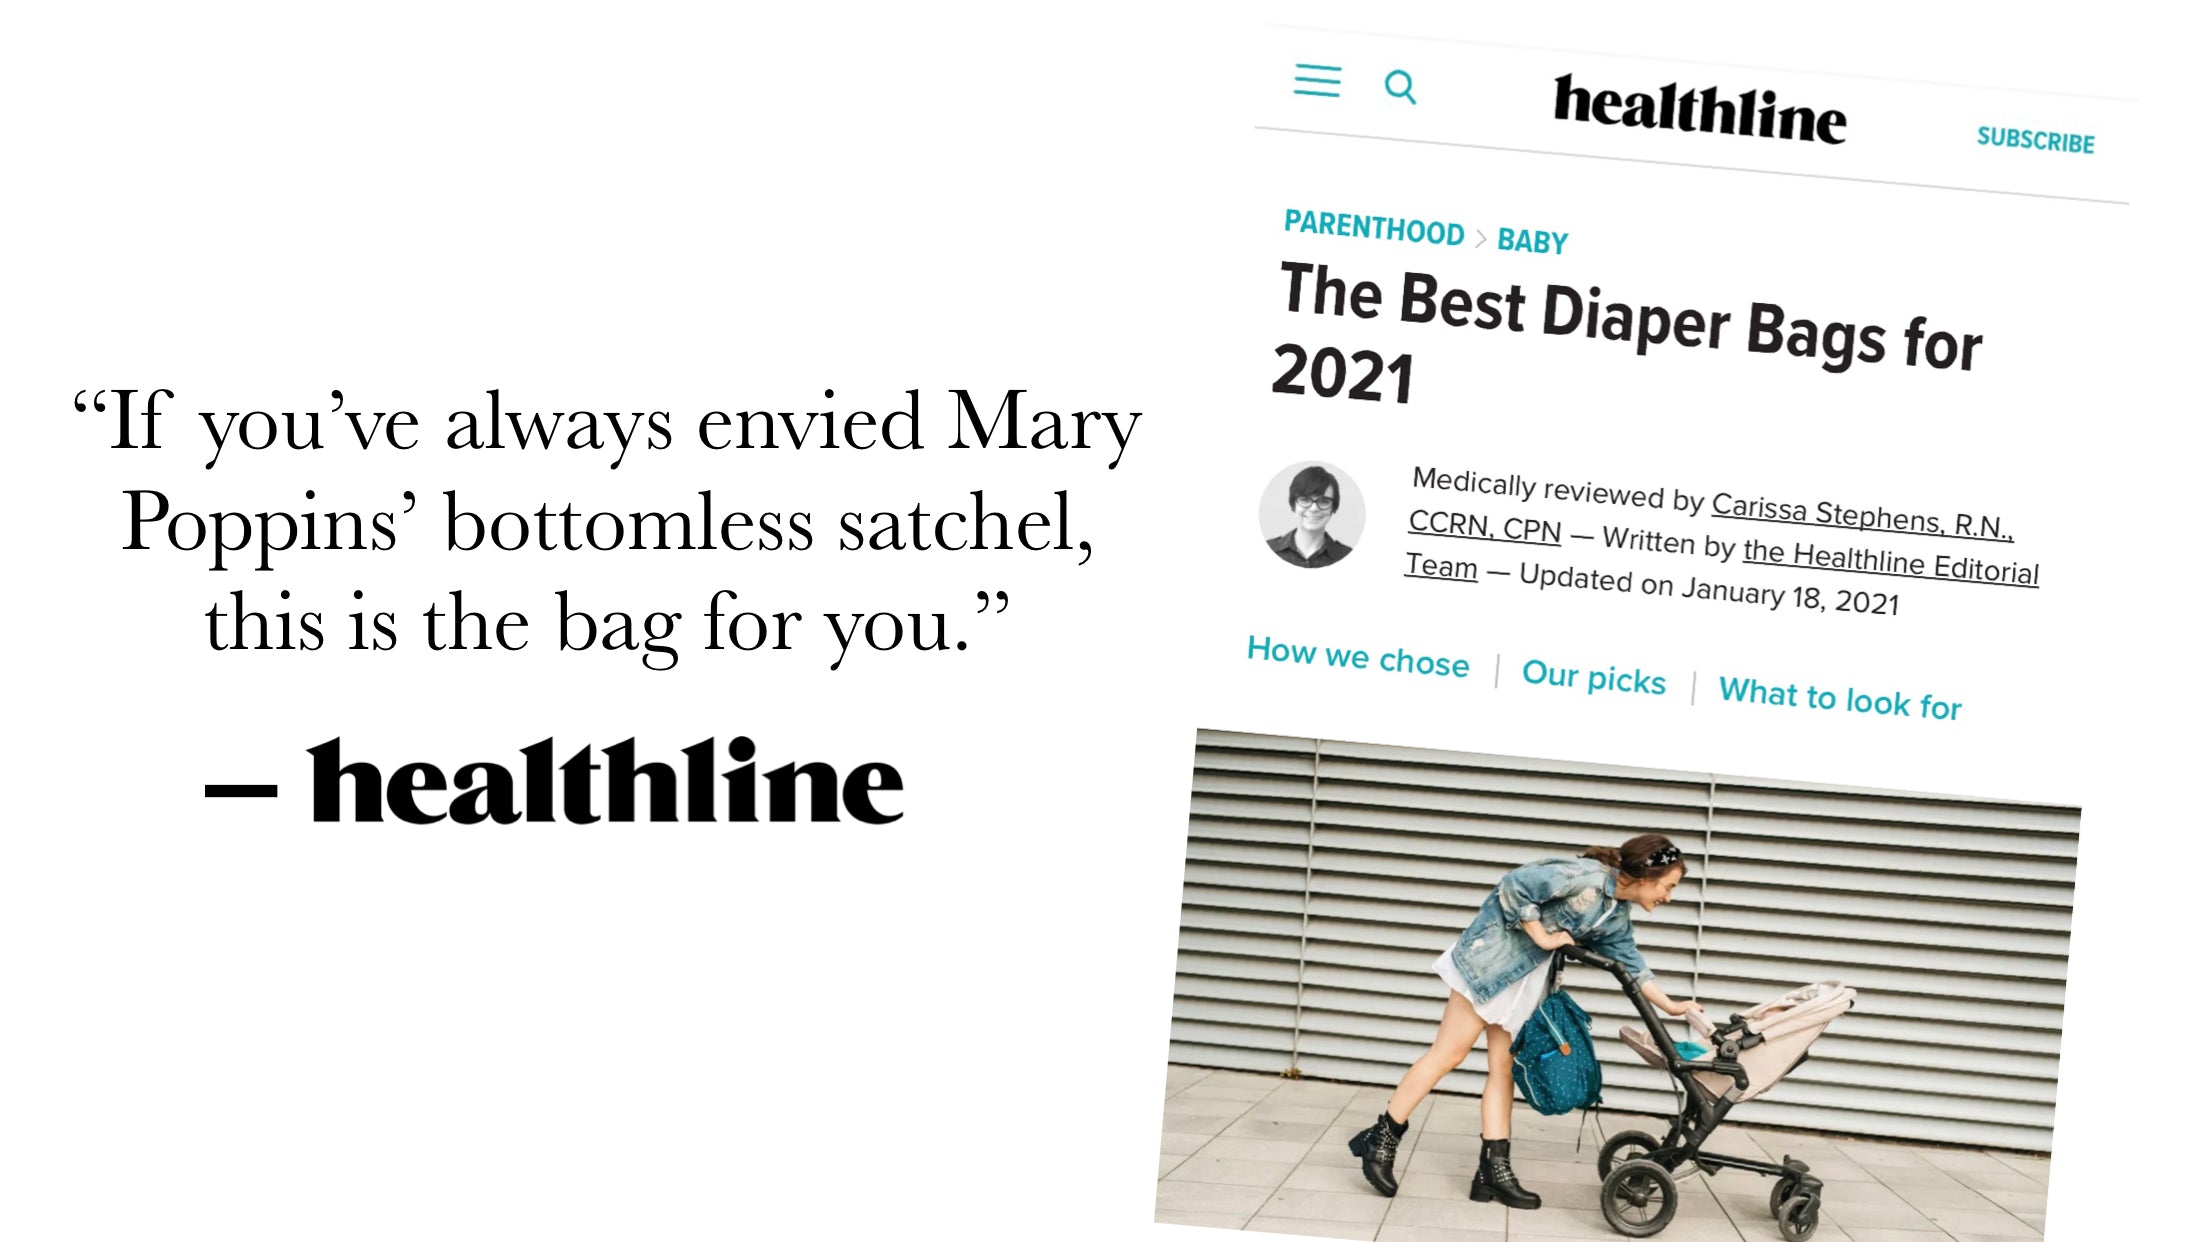 Healthline: "The Best Diaper Bags of 2021"